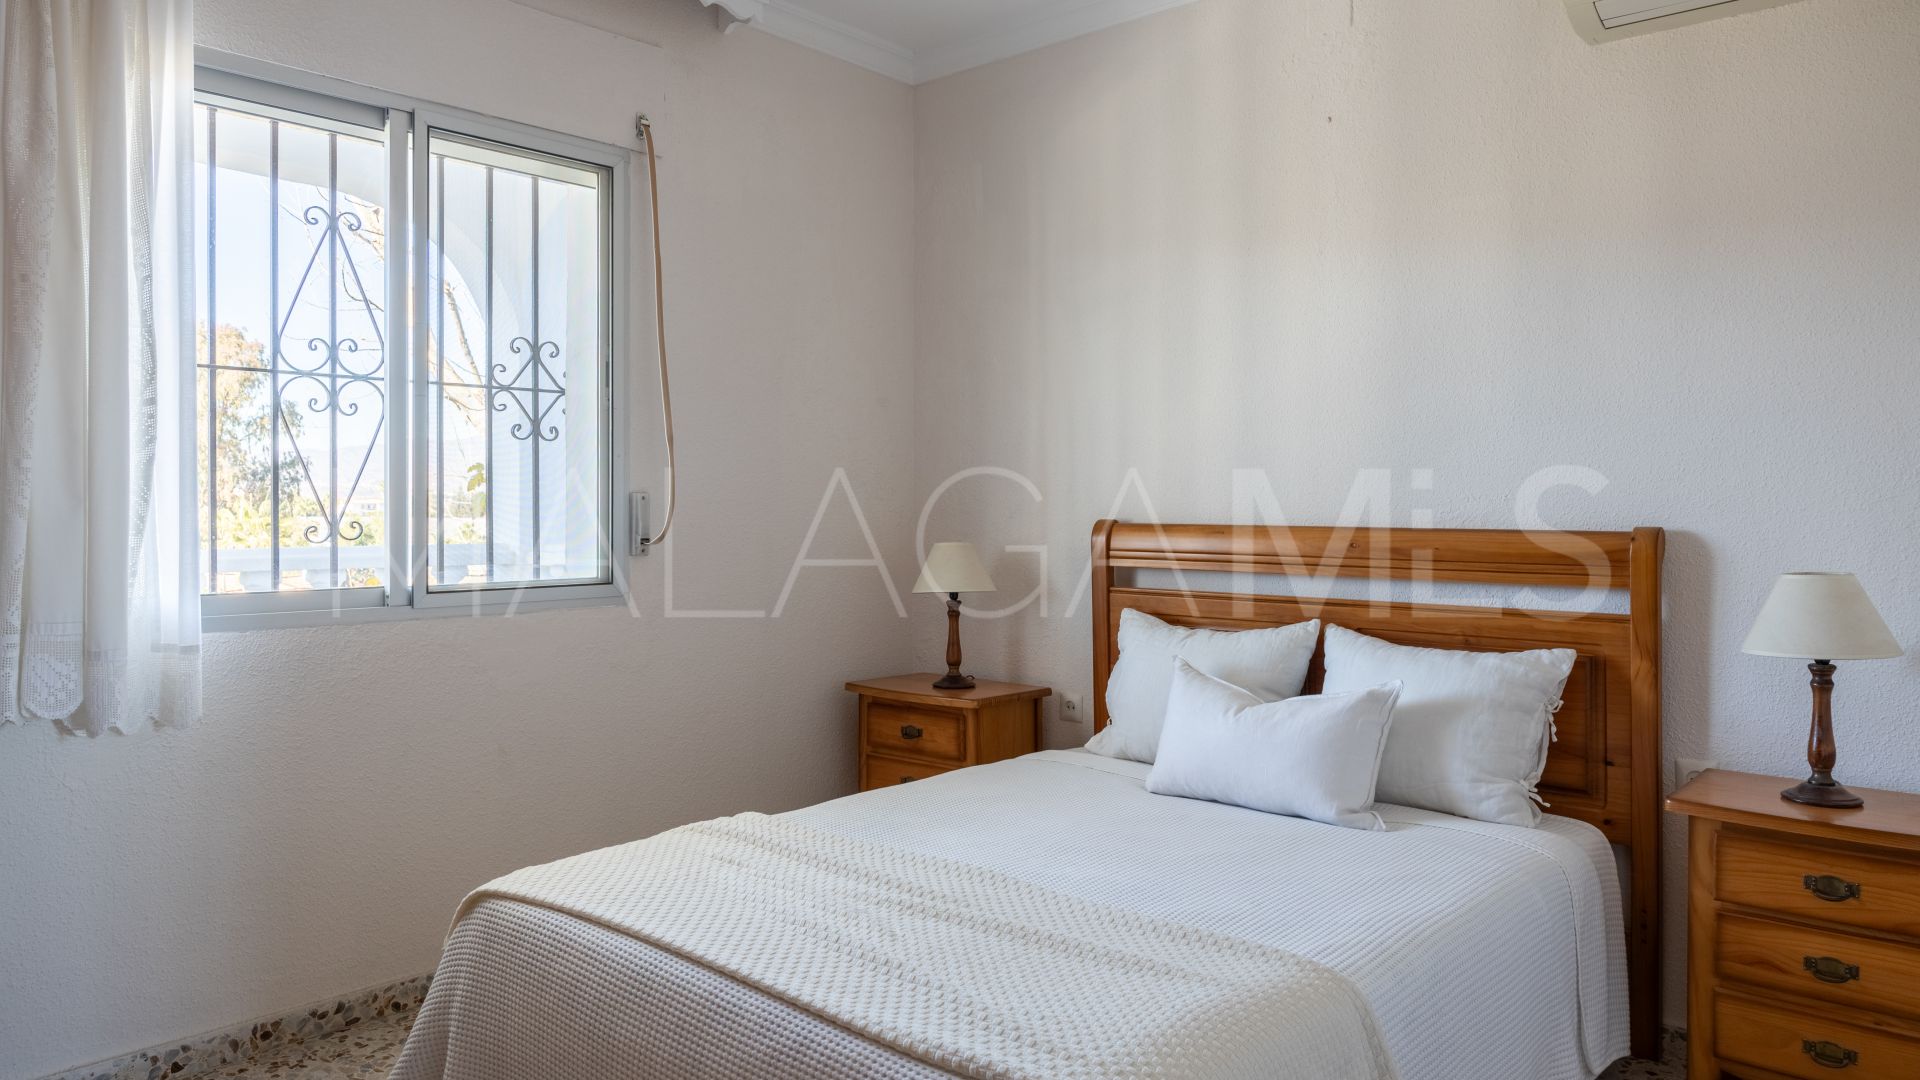 Finca for sale in Alhaurin de la Torre with 3 bedrooms